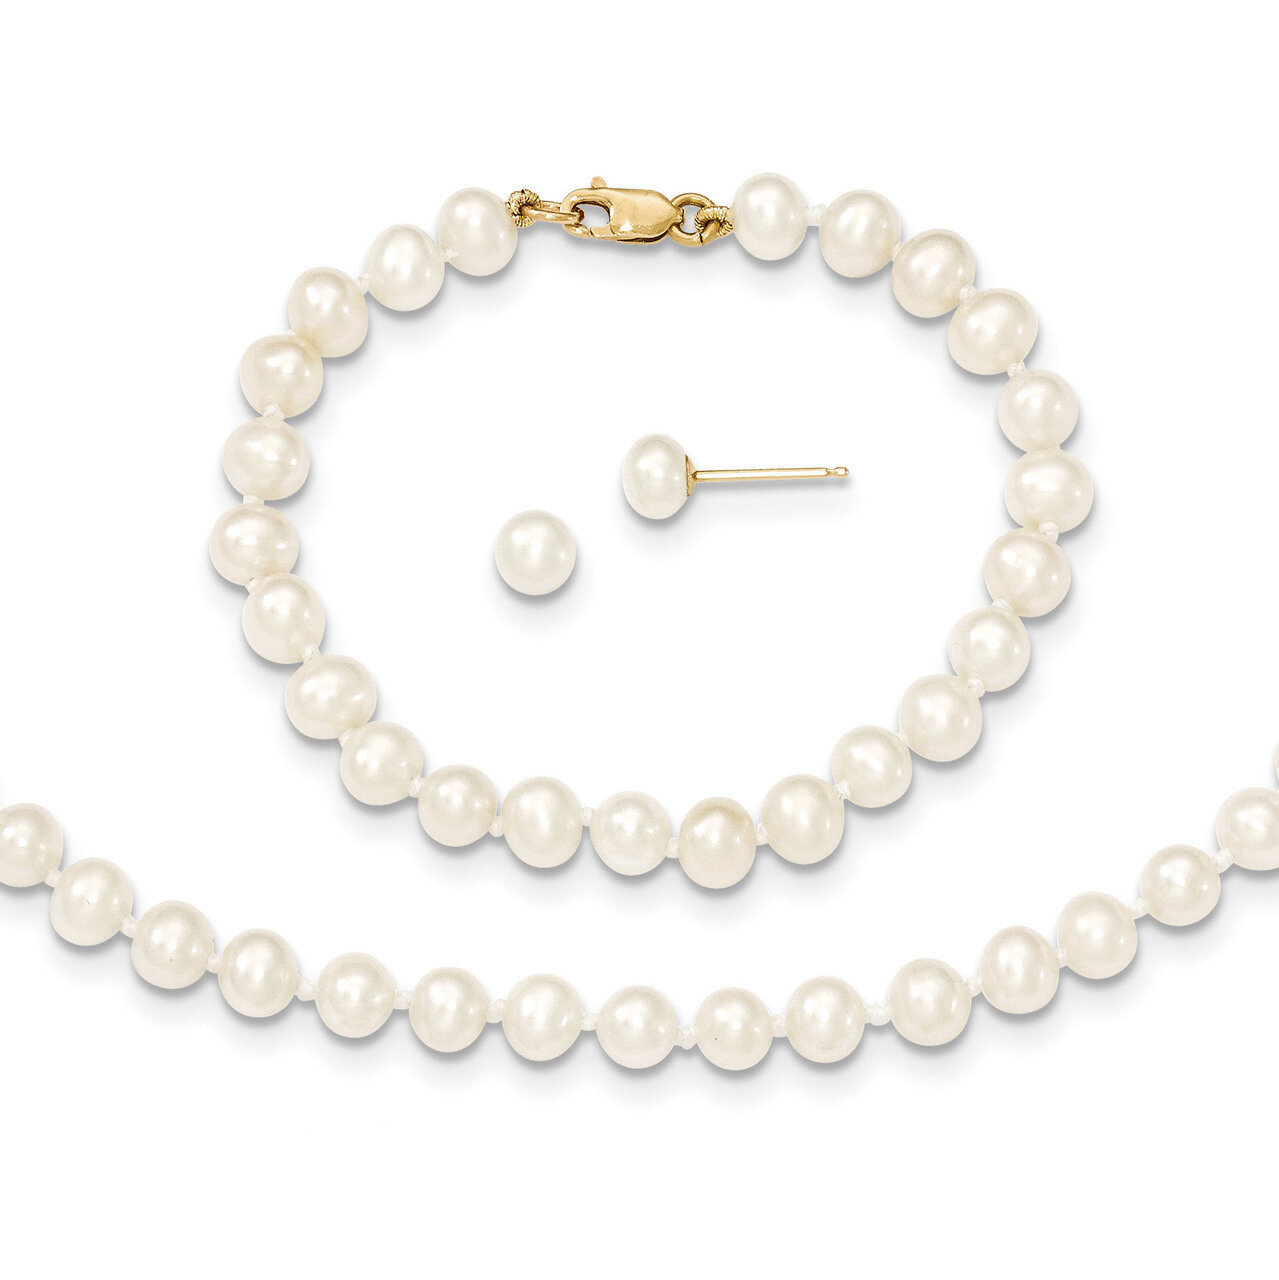 5 Inch 4-5mm Fresh Water Cultured Pearl 14in Necklace Bracelet Earring Set 14k Gold XF503SET